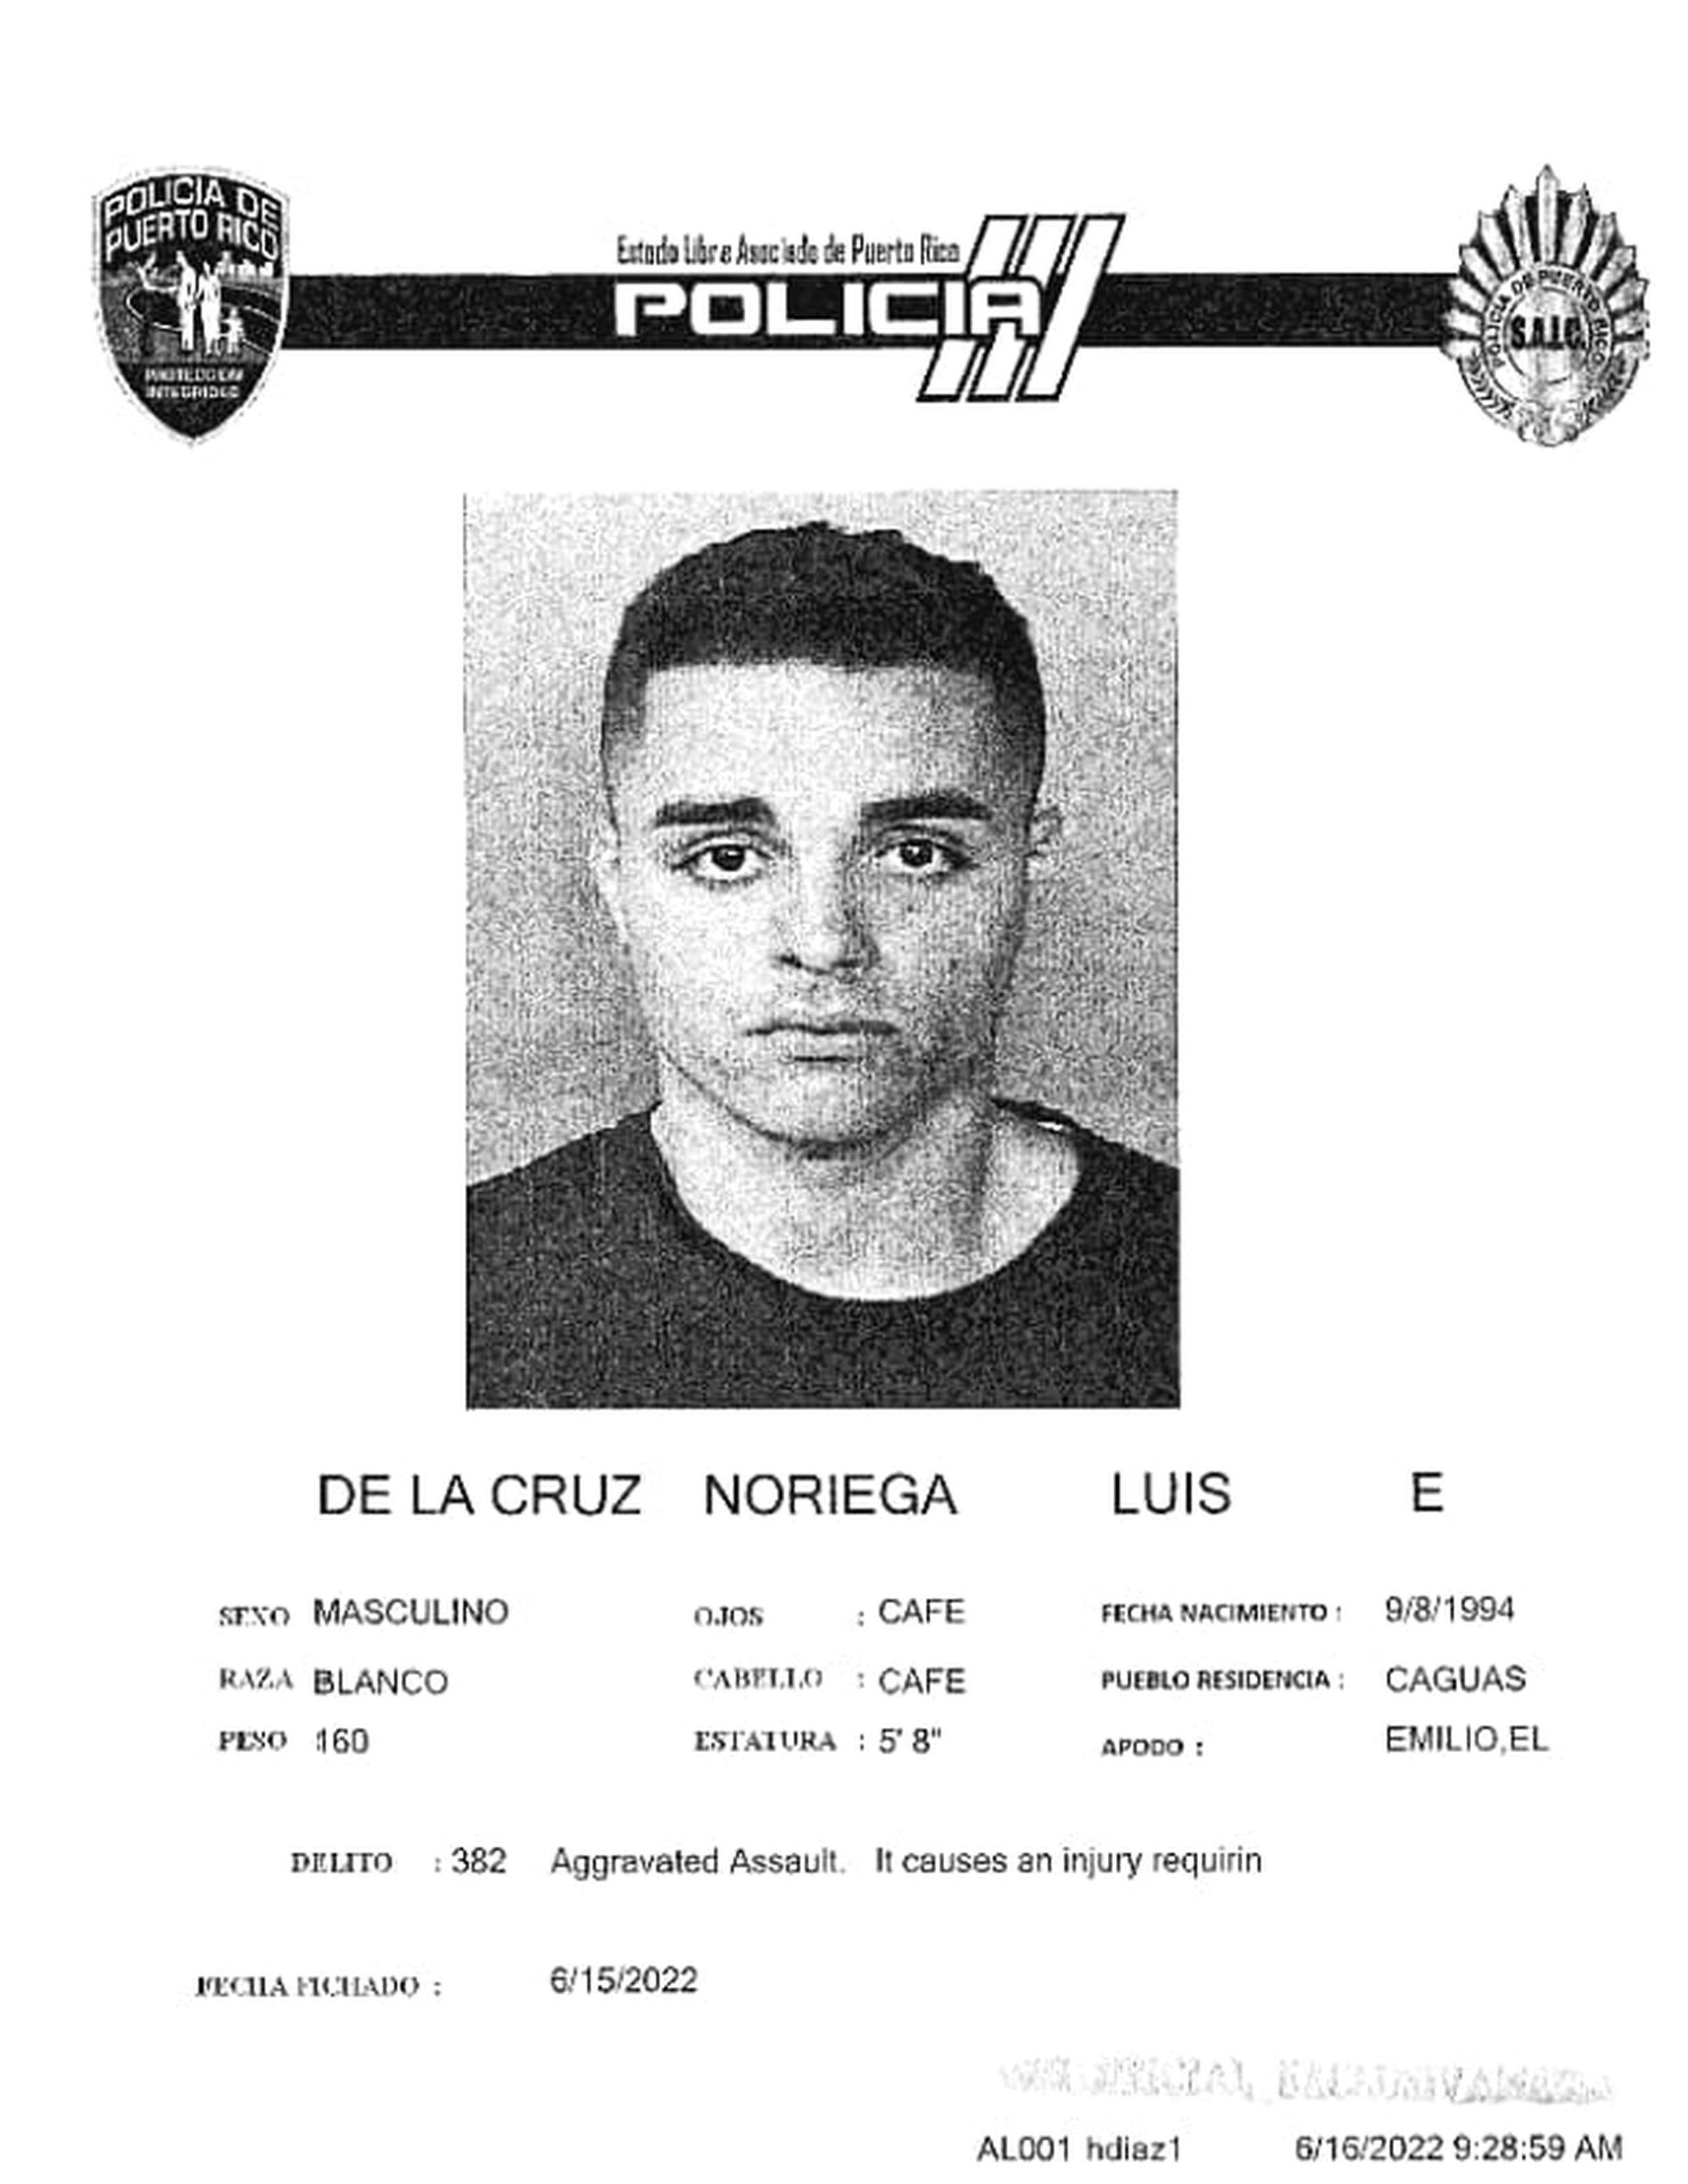 Luis Emilio De La Cruz Noriega.